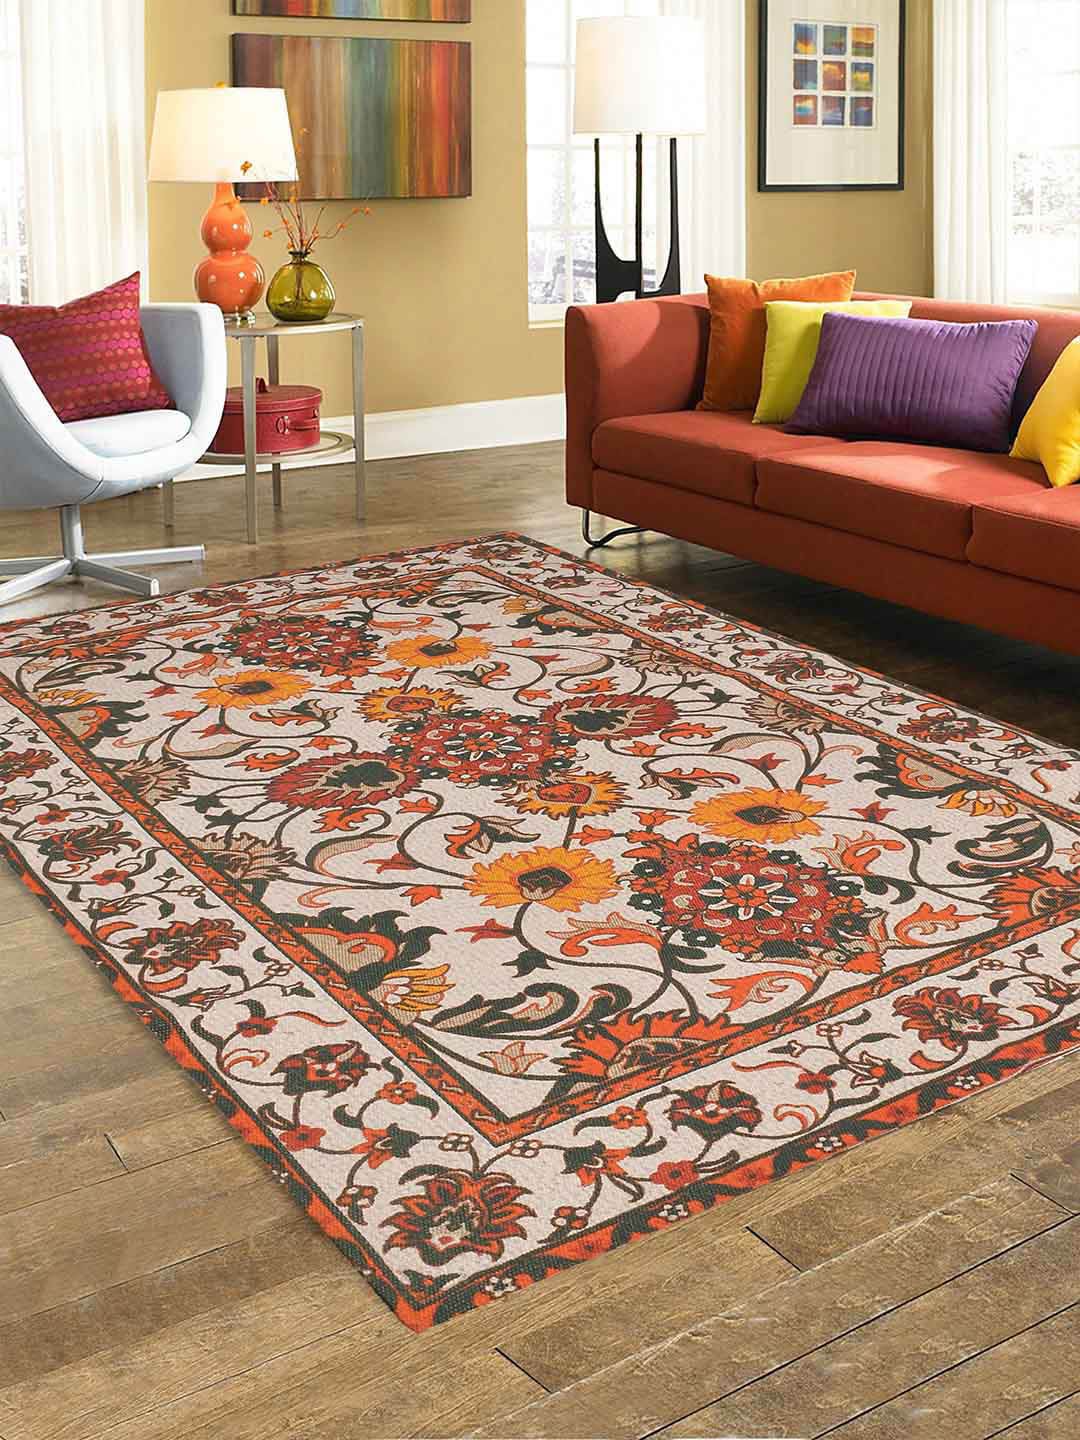 BLANC9 & White & Orange Floral Cotton Carpets Price in India